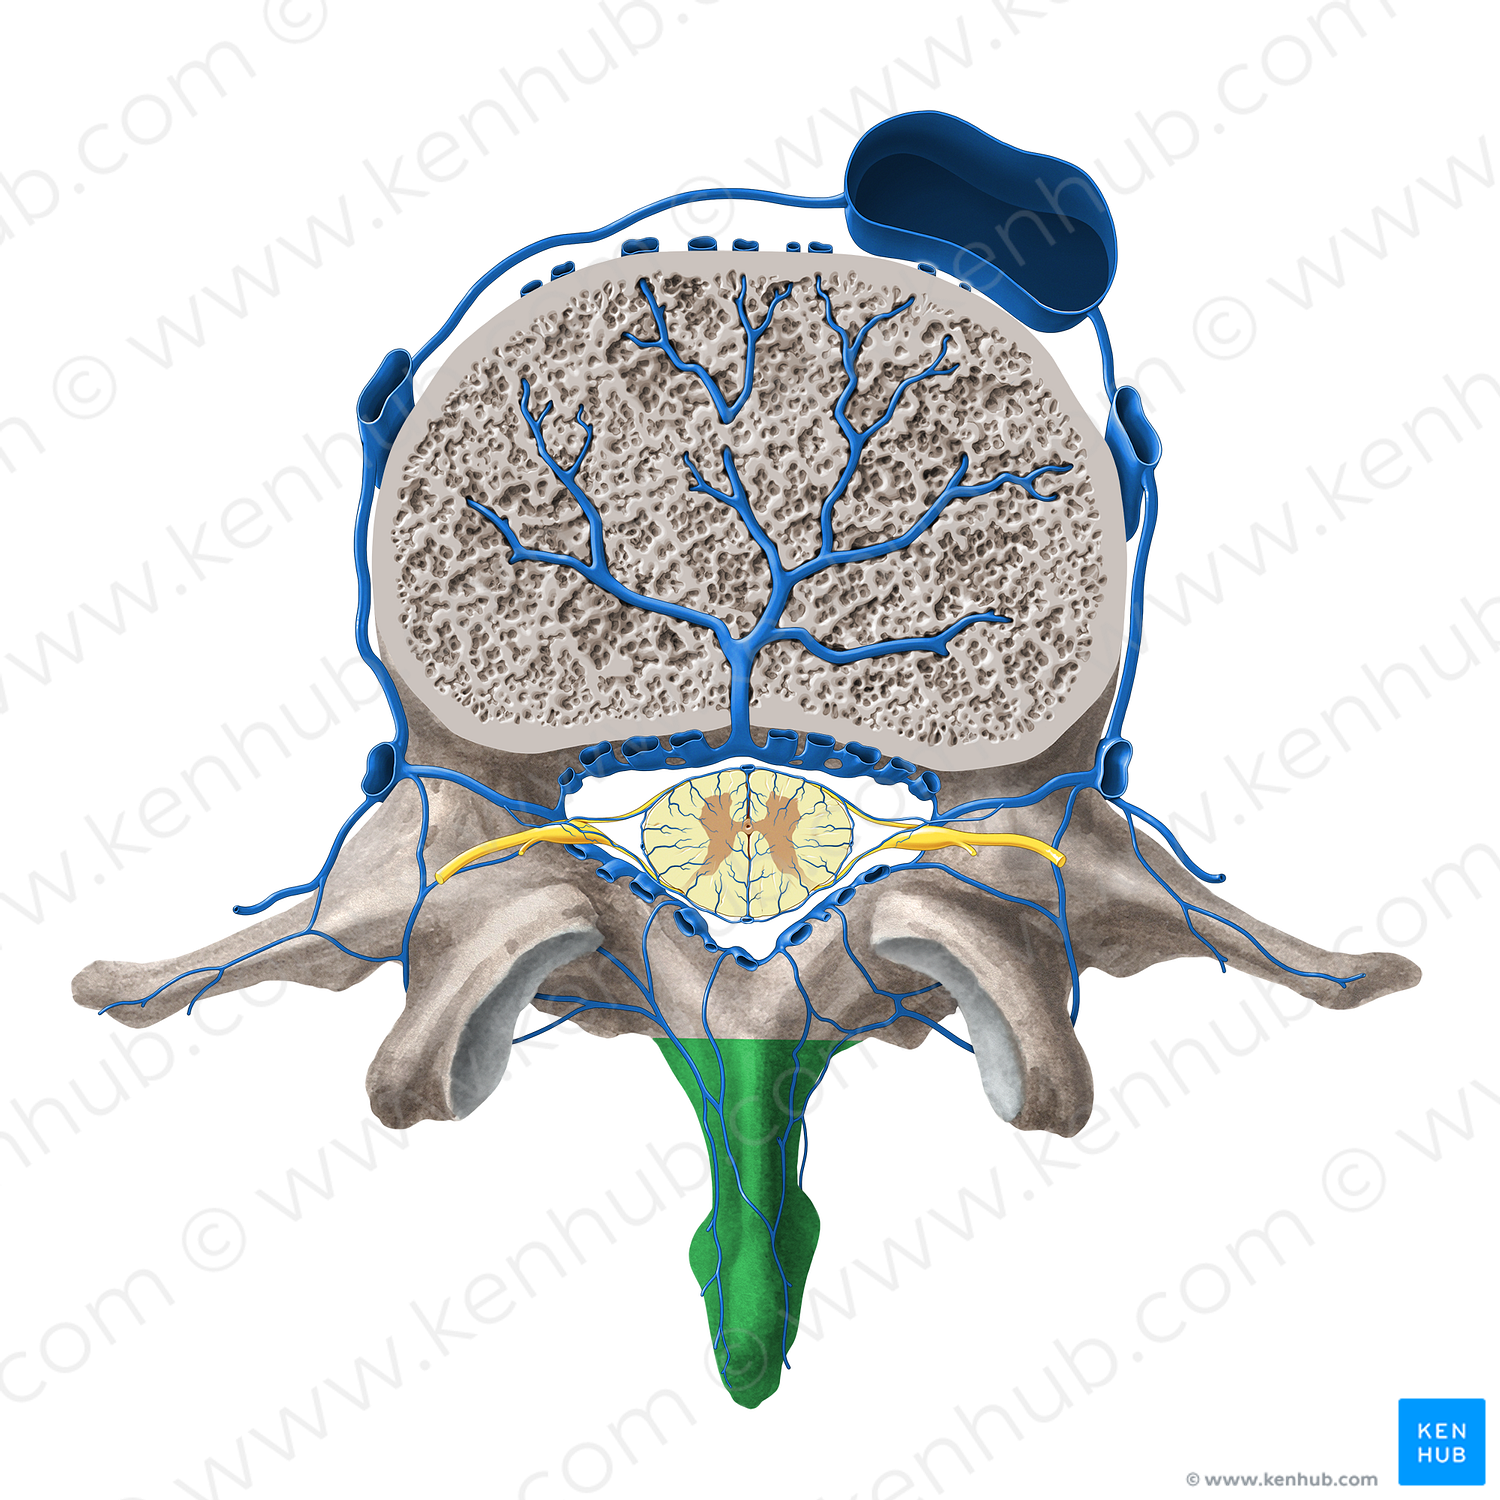 Spinous process of vertebra (#8287)